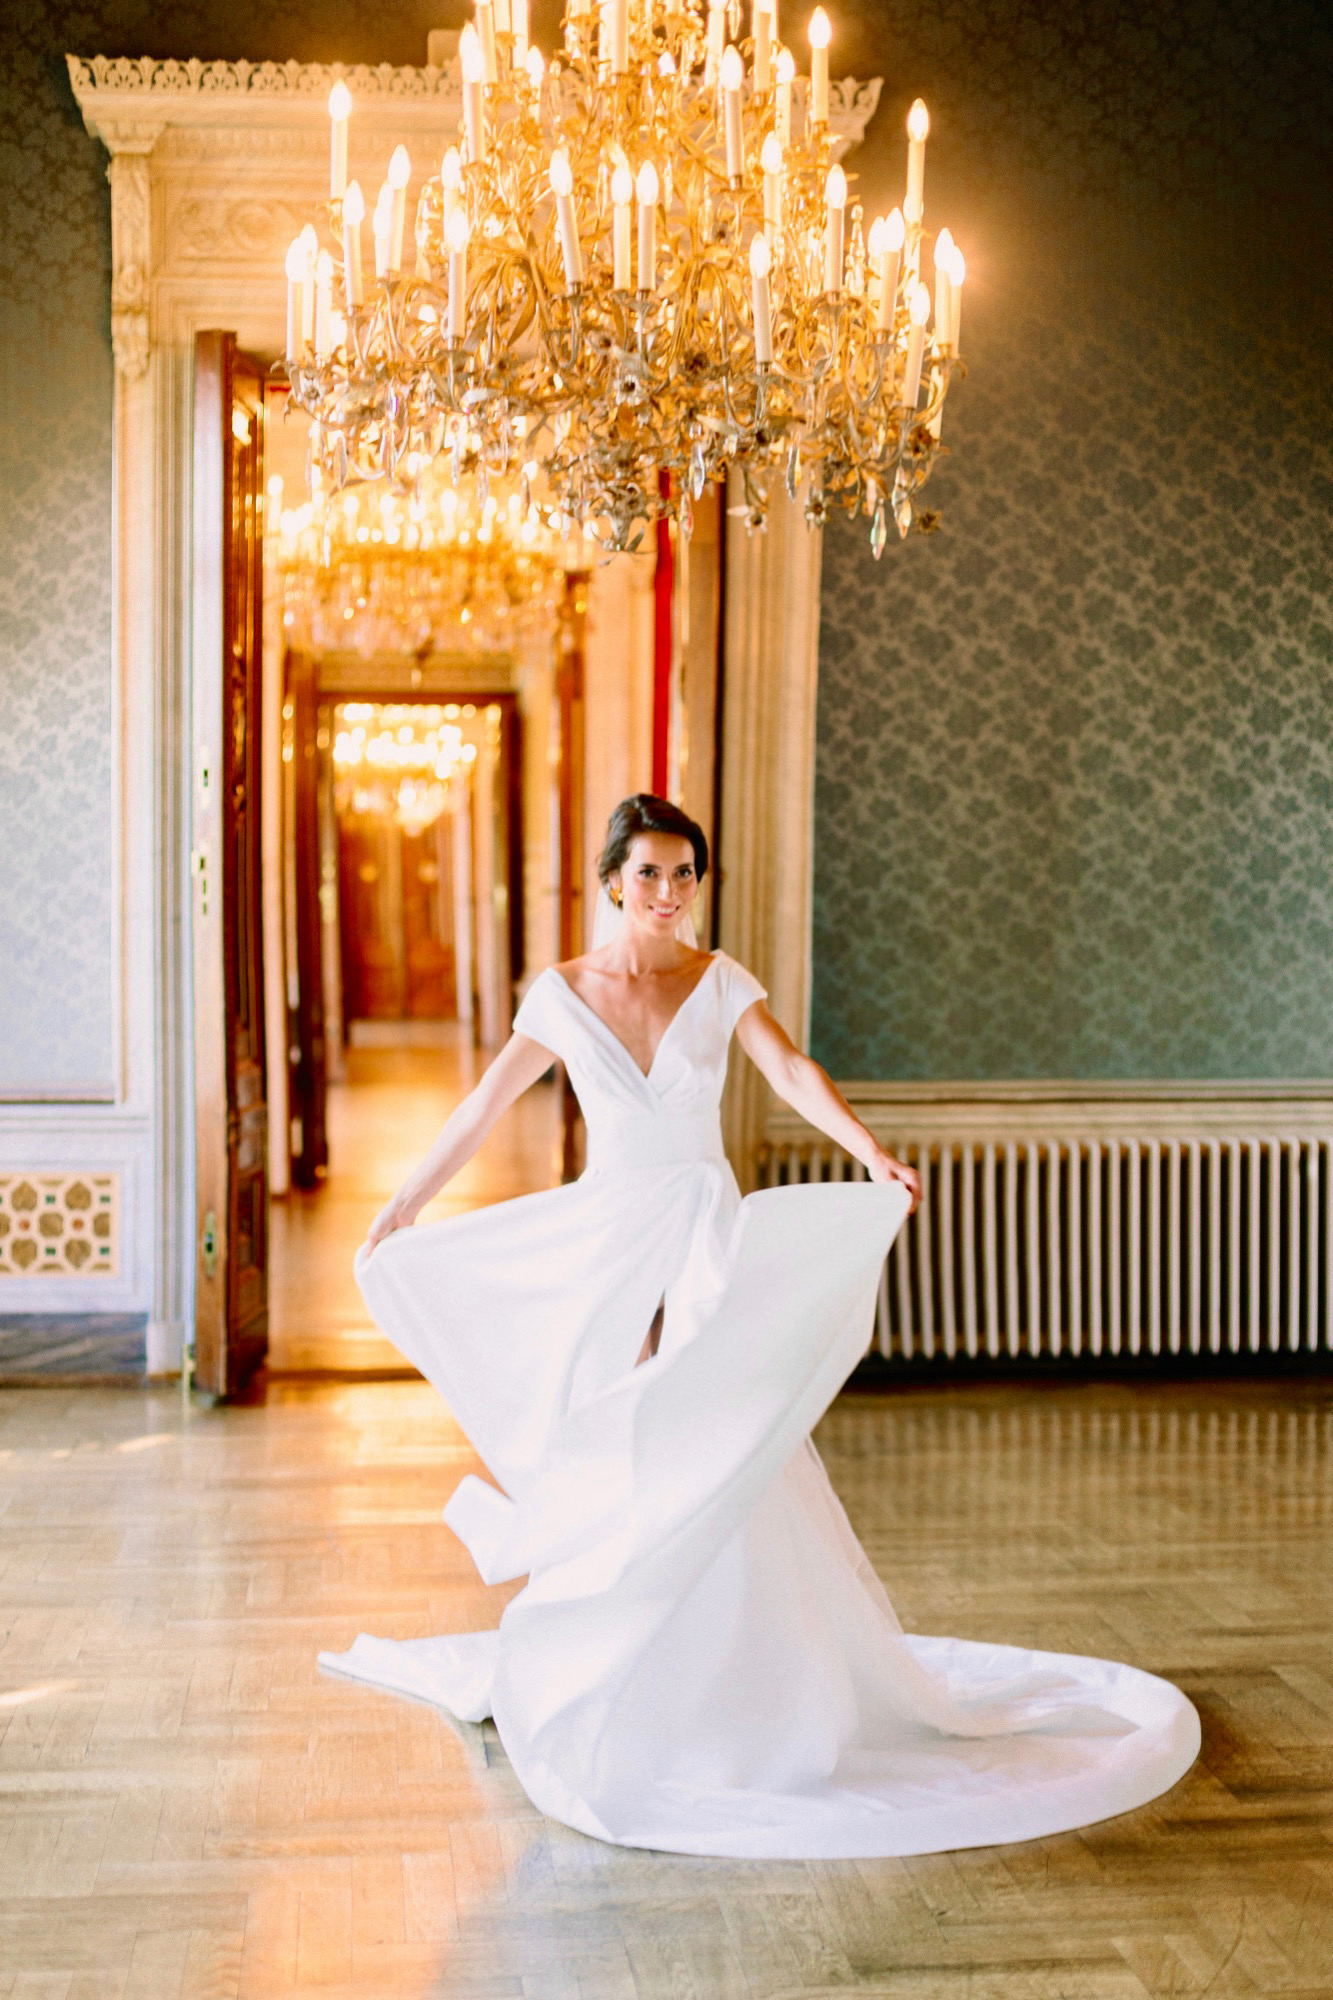 Wedding Schloss Albrechtsberg – Weddingplaner: Marrylightwedding Photography: Julia Sloboda Couple: Sophie & Hendrik Location: Schloss Albrechtsberg Bridalstyling: Uta Stabler